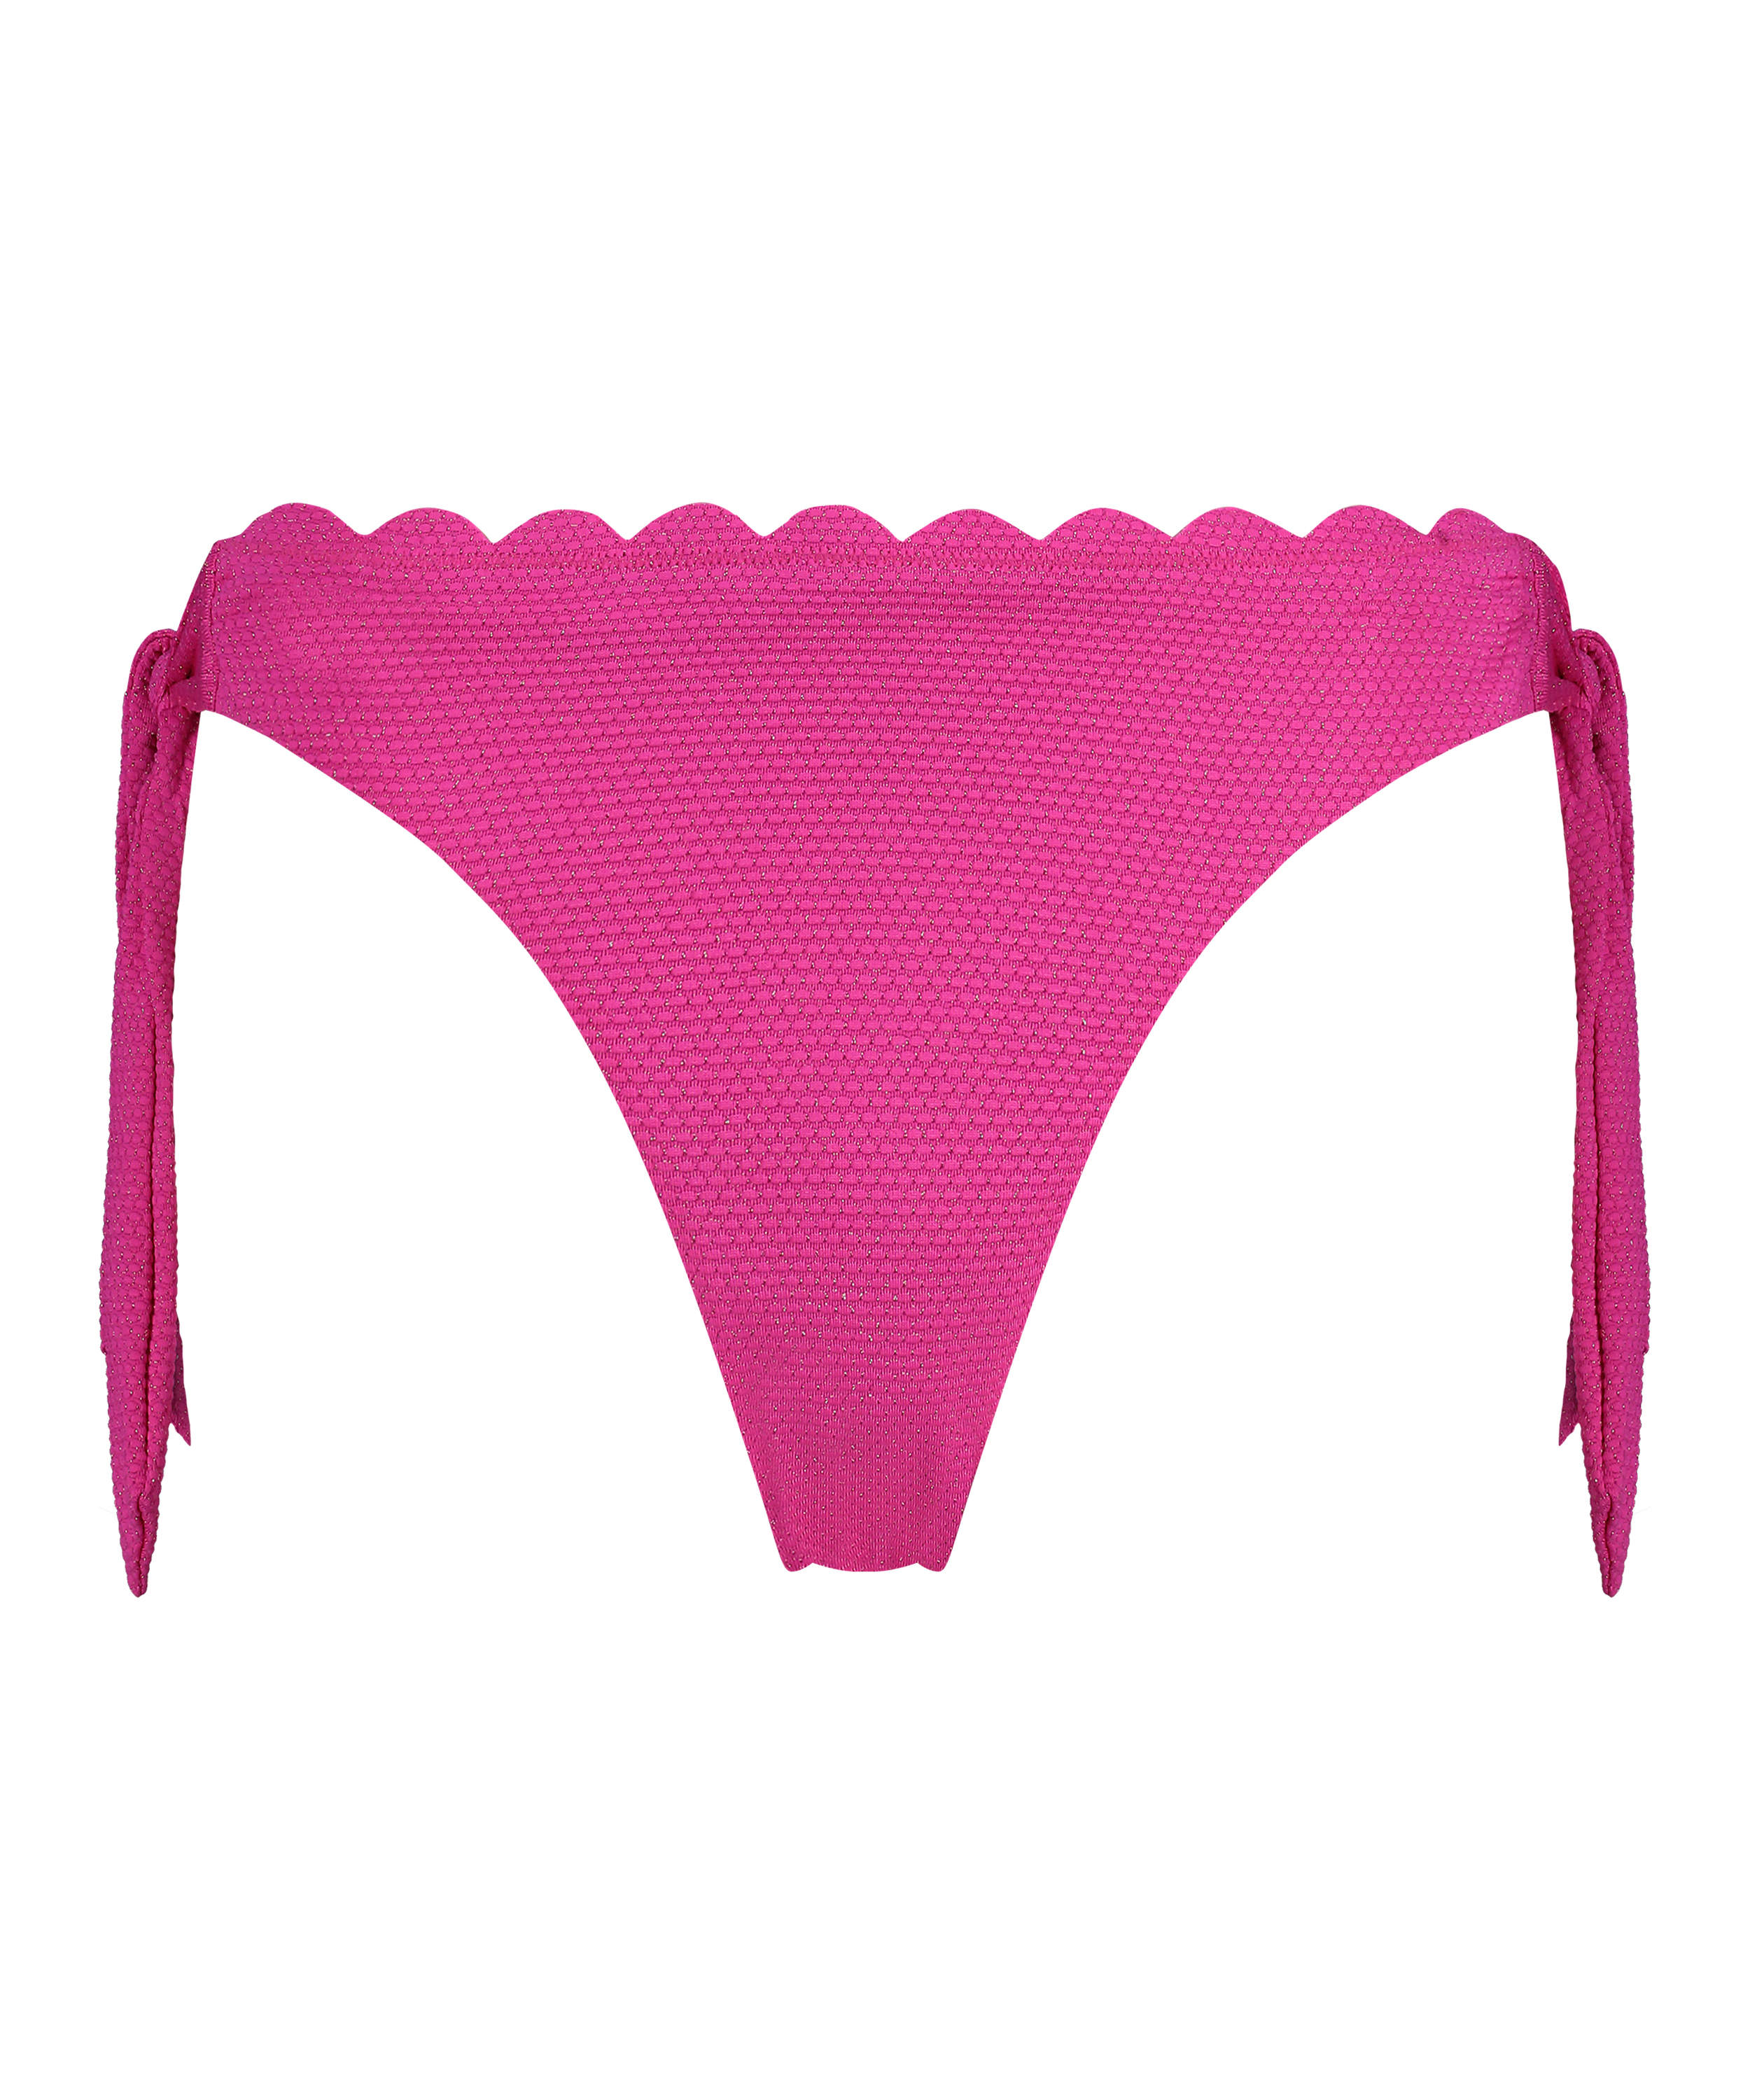 Bikinitrusser Scallop Lurex, pink, main